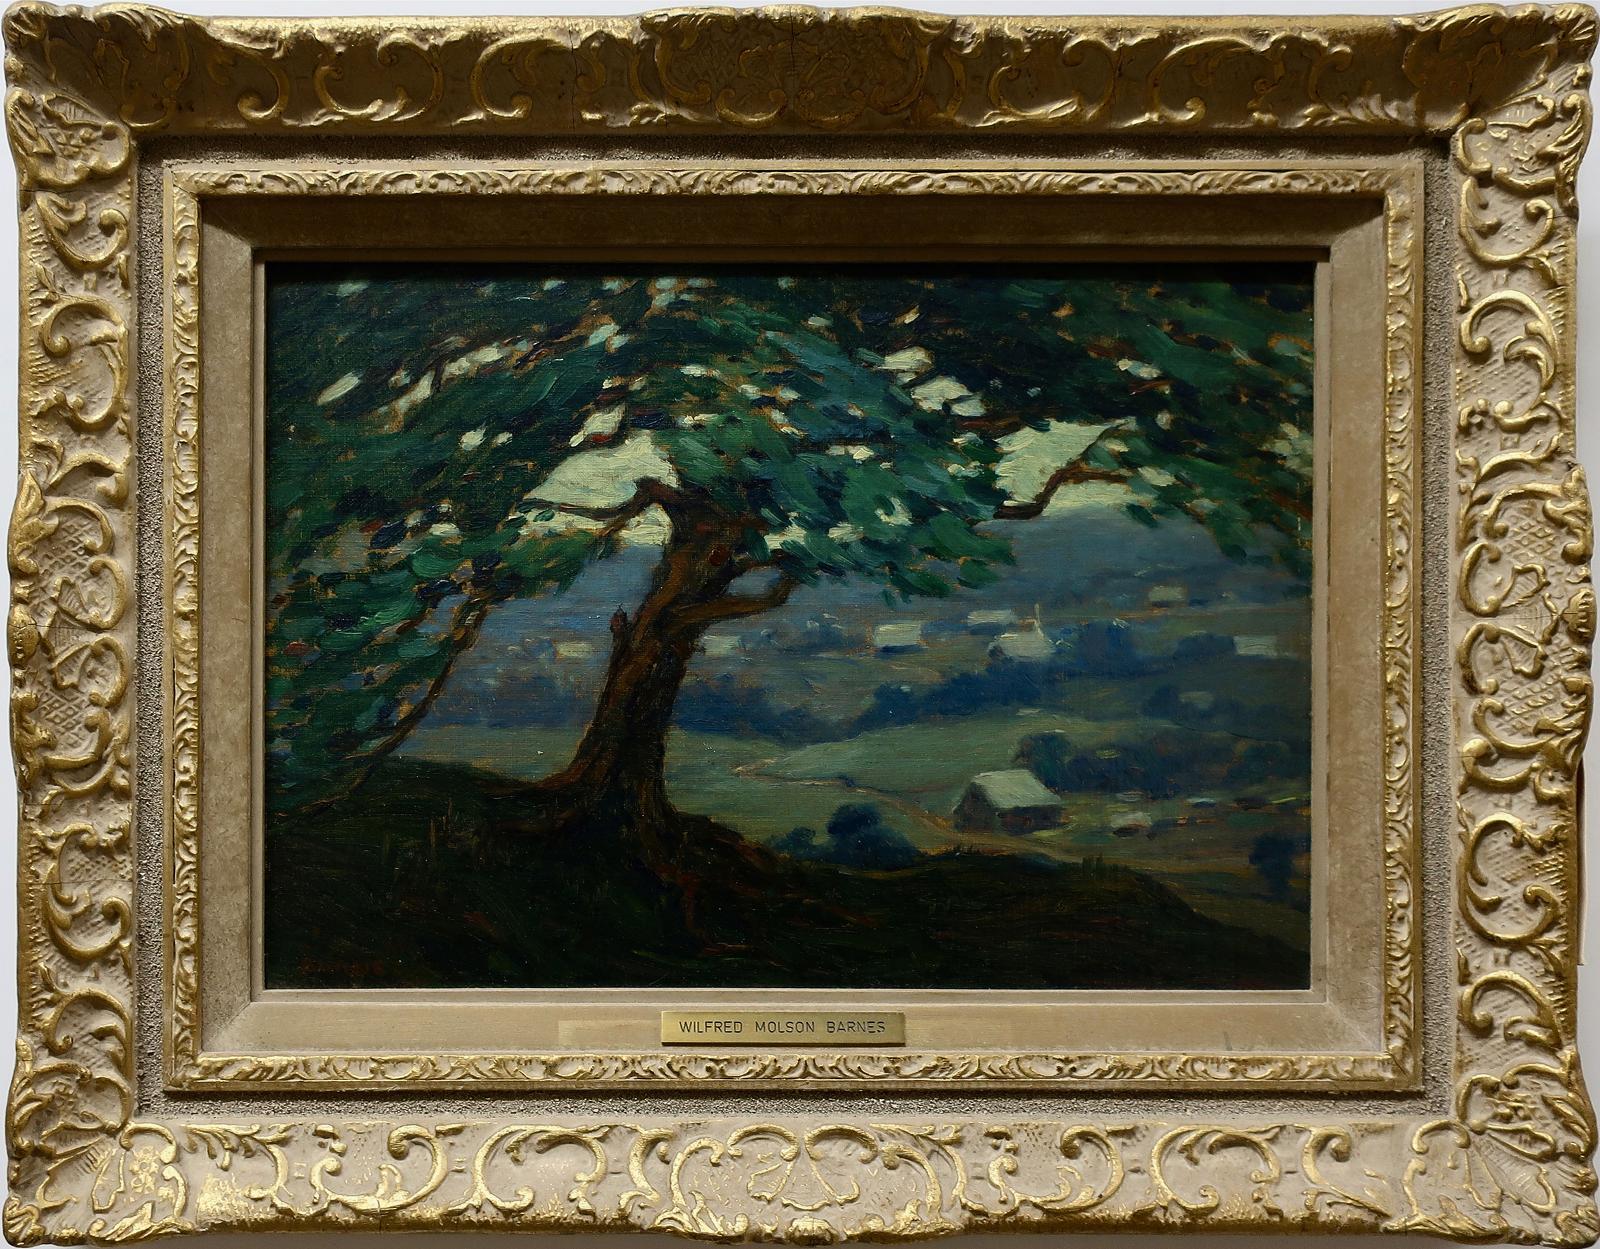 Wilfred Molson Barnes (1882-1955) - Through The Tree